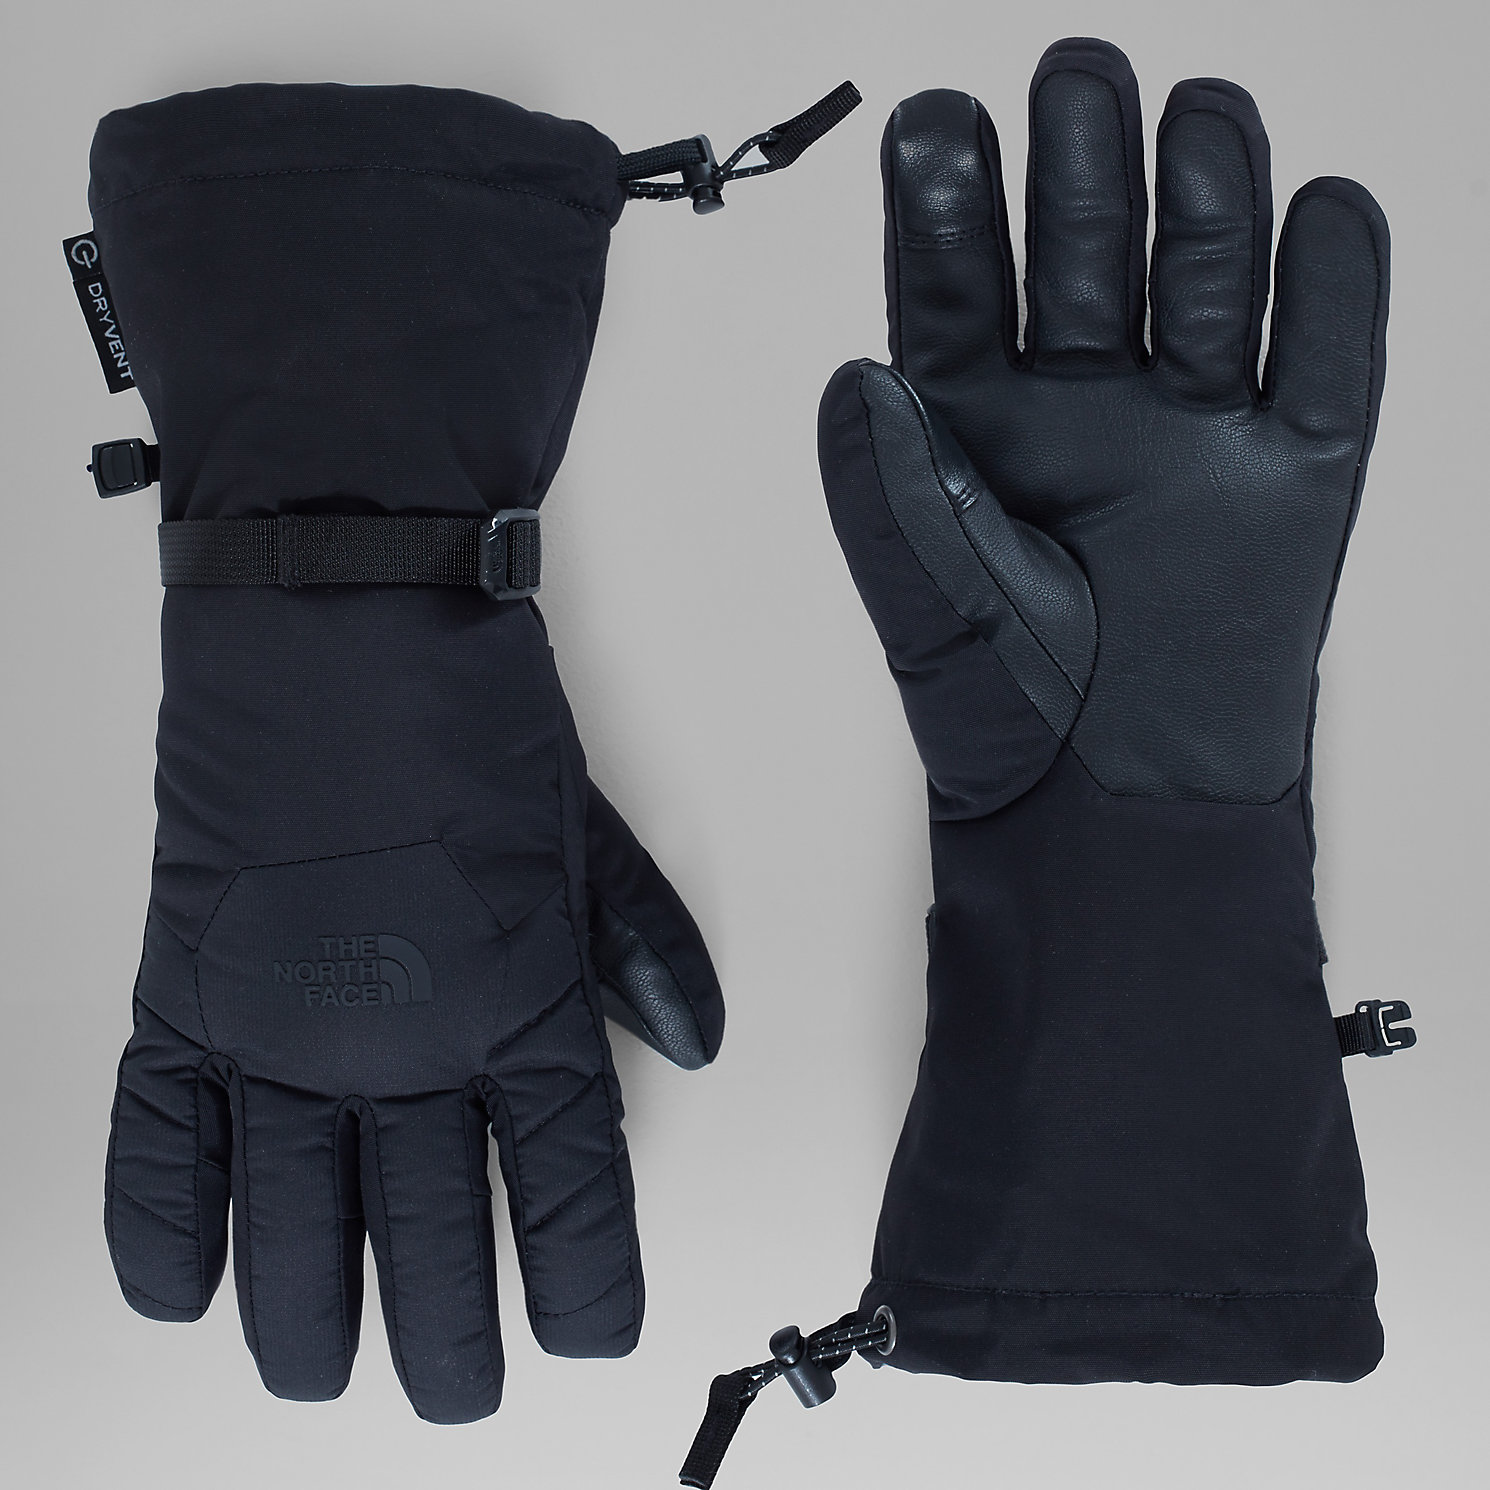 The North Face Men’s Revelstoke Etip Gloves NF0A34M1 The North Face ktmart 5